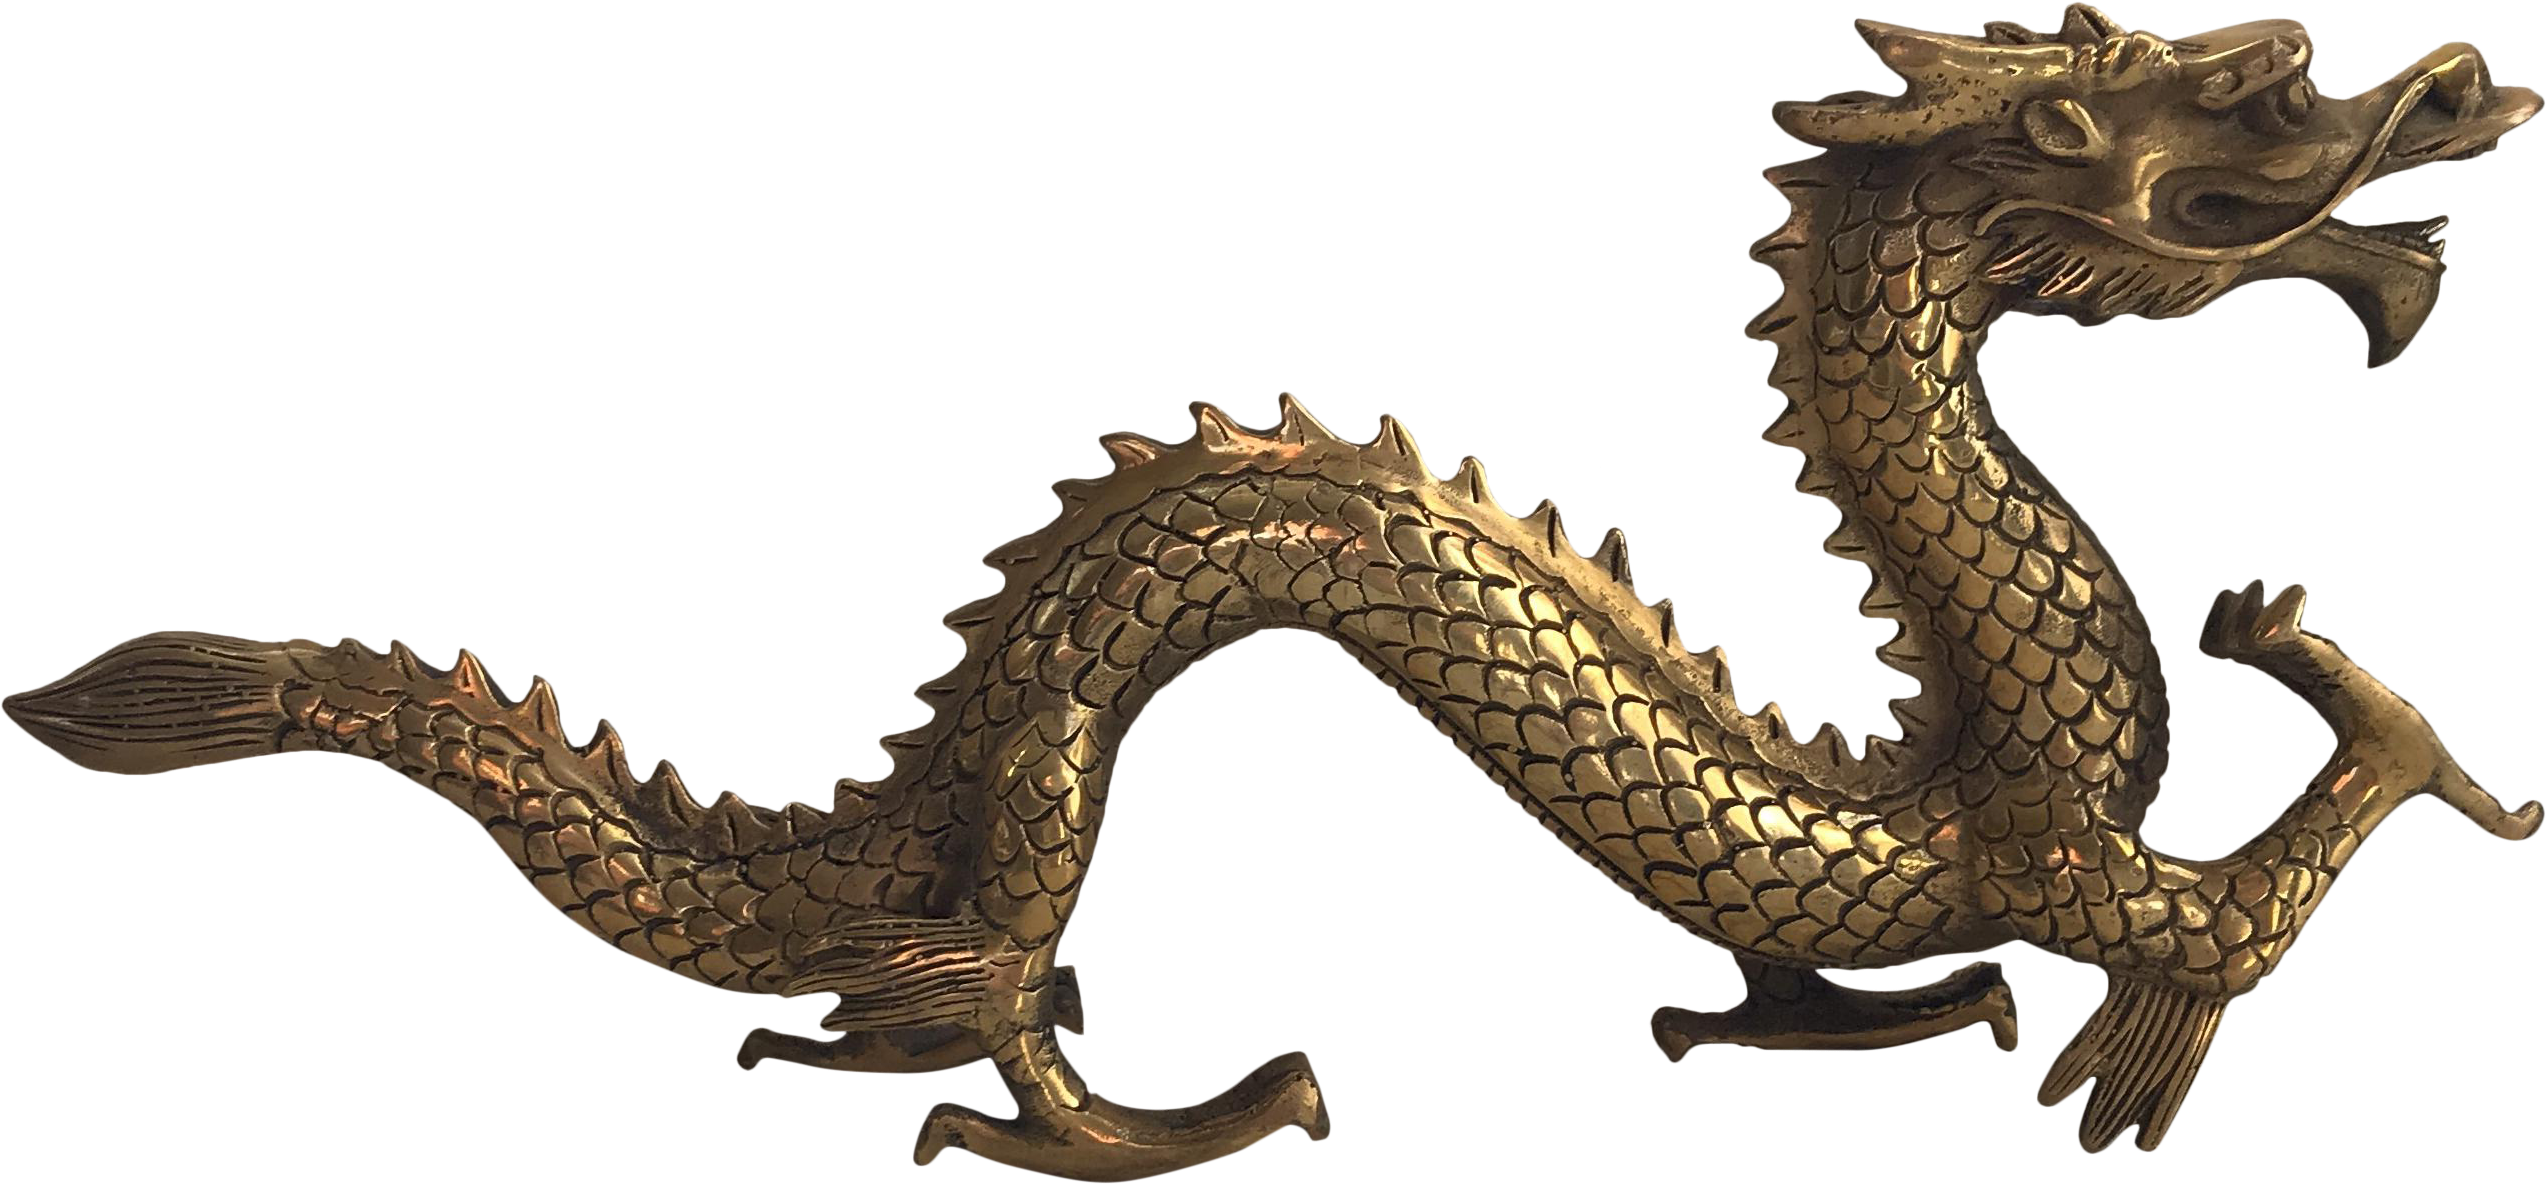 Chinese Dragon (2828x1314)